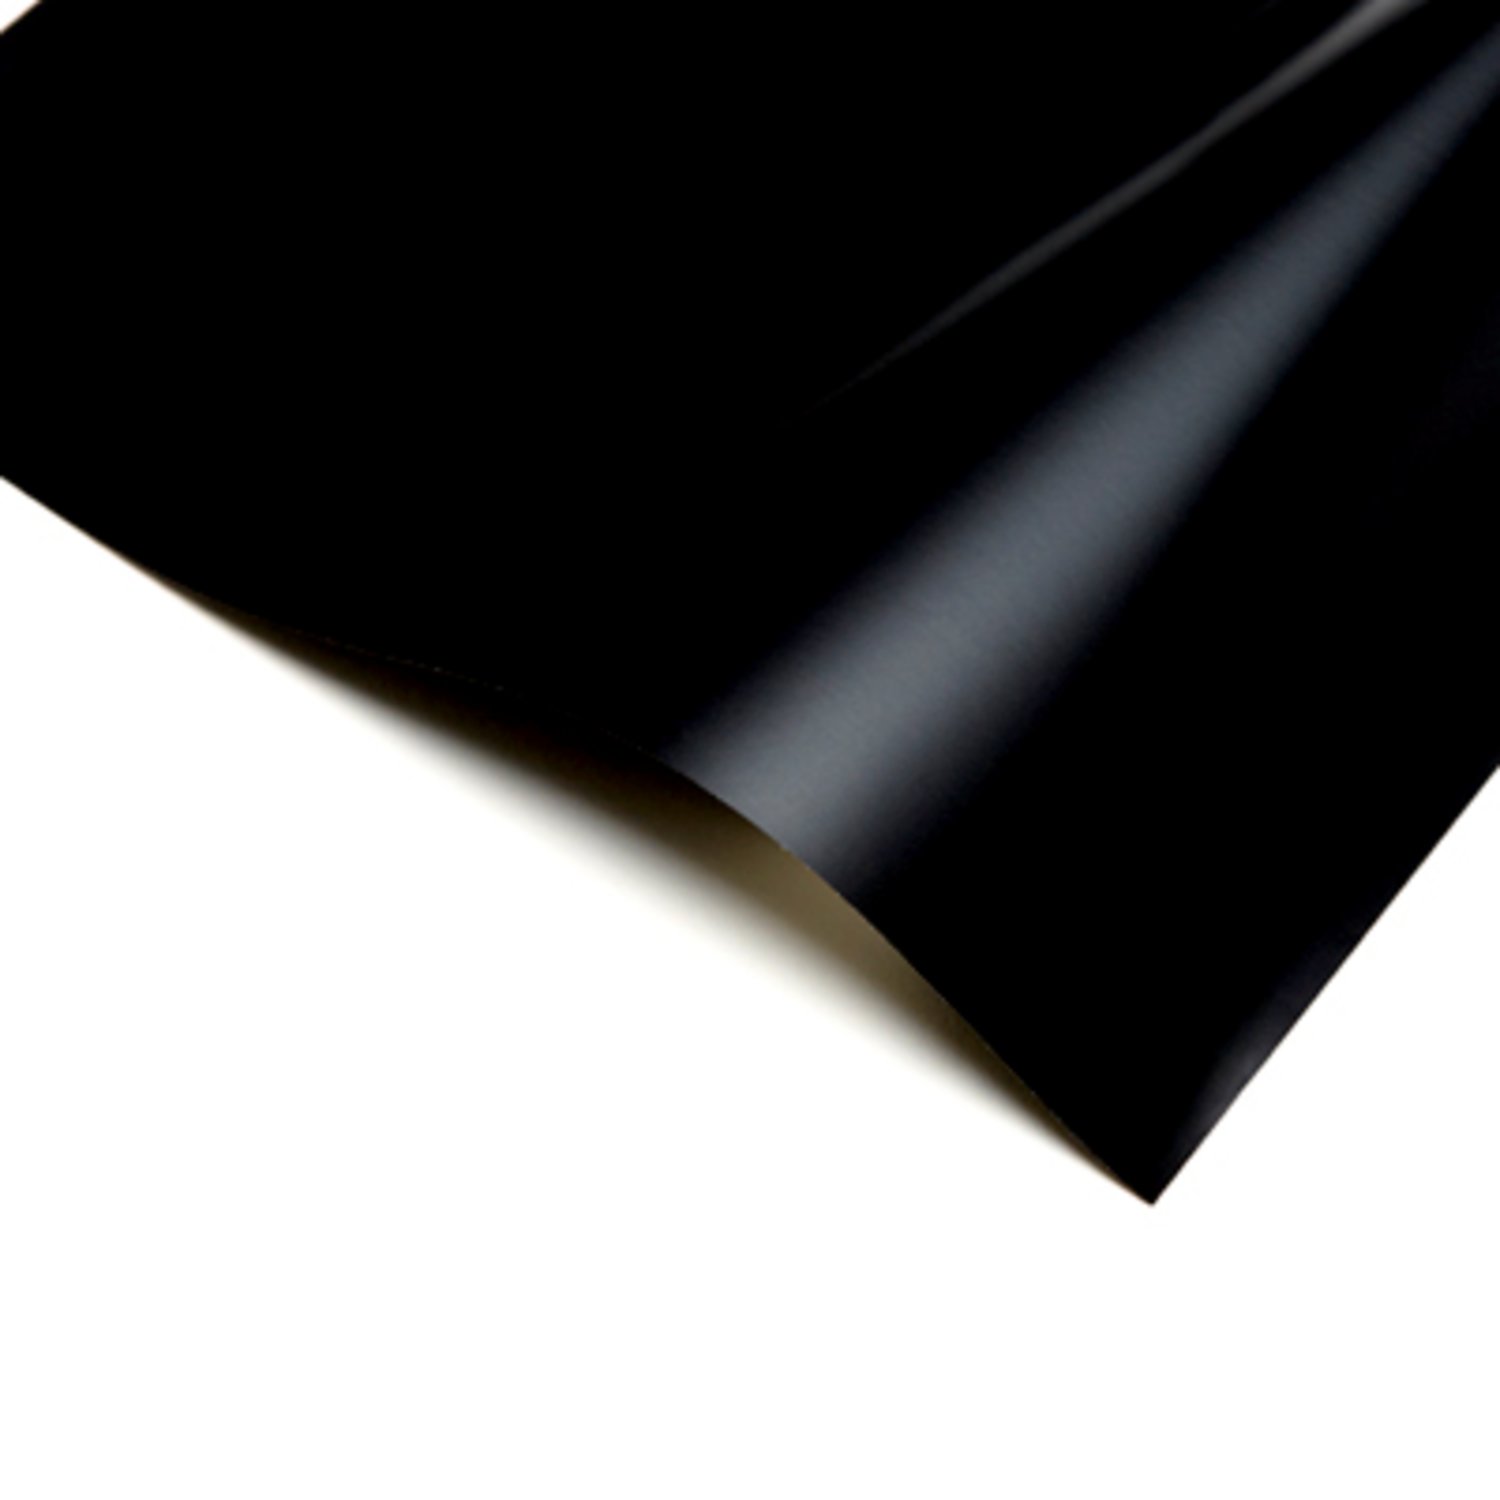 7010296993 - 3M Plus Flexible Reflective Film Front Bumper Stripe 680-85, Black,
Sbpag-50, 2 in x 104 in